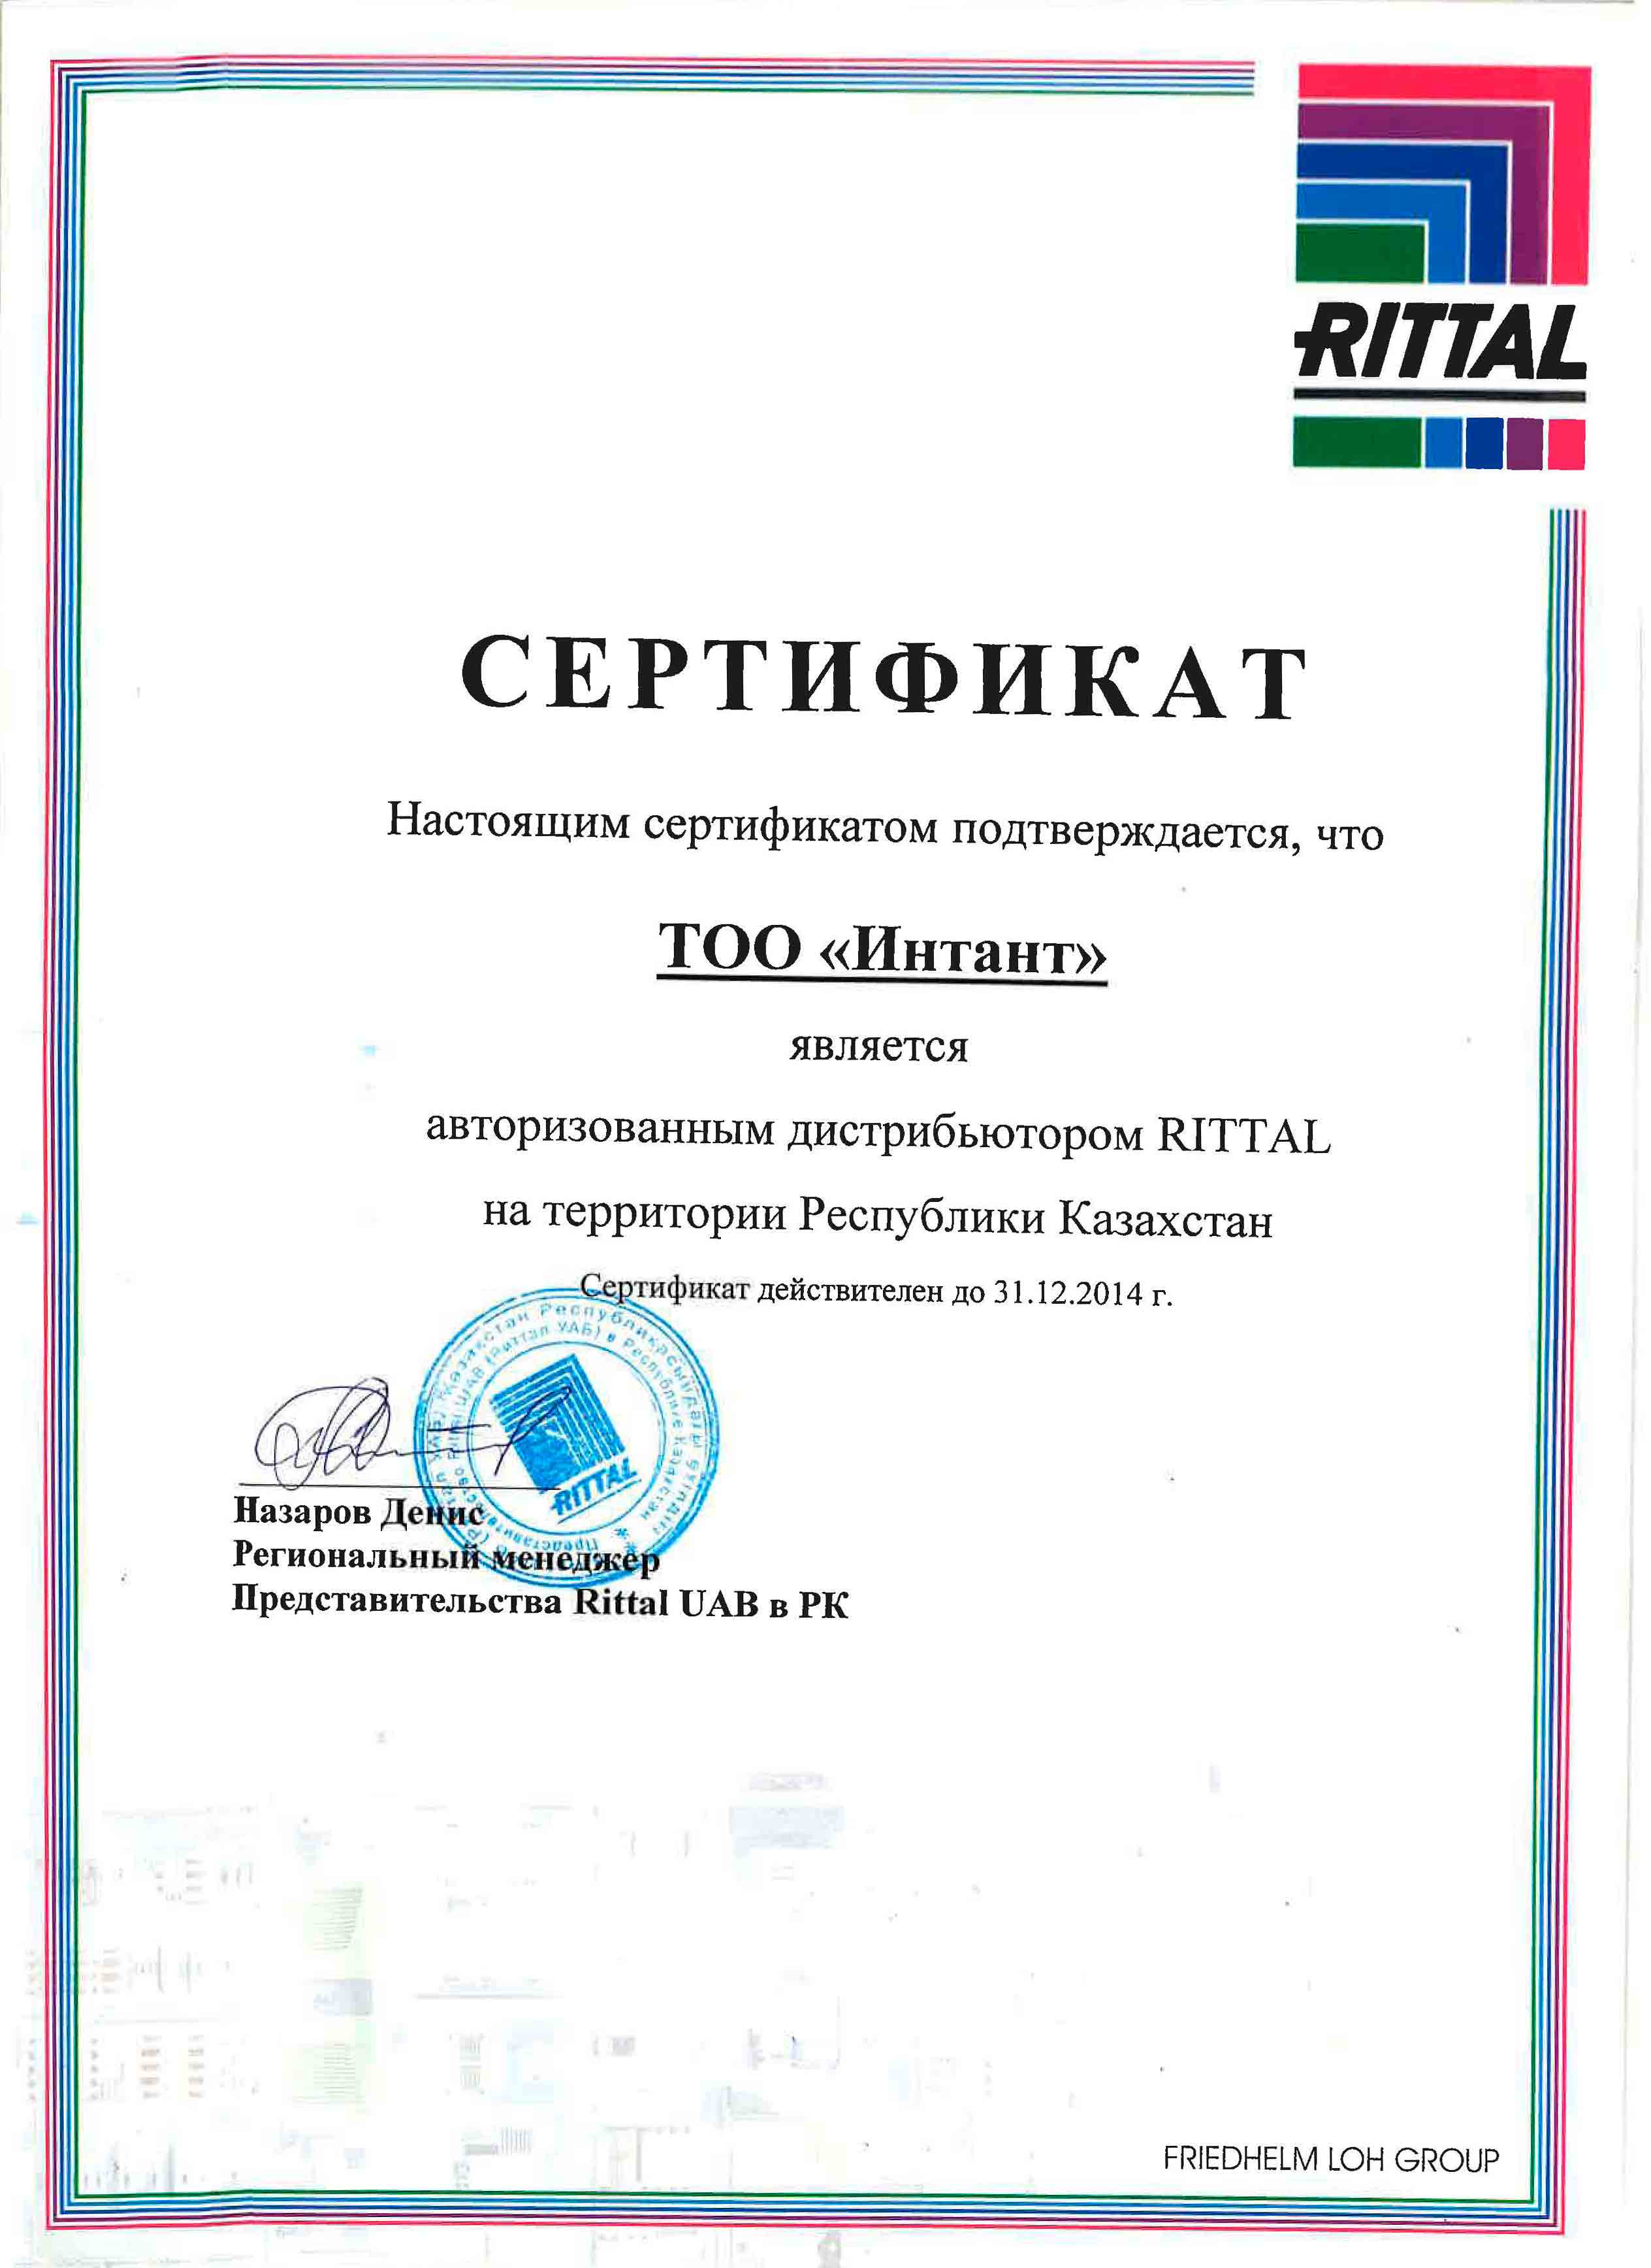 Сертификат RITTAL 2014